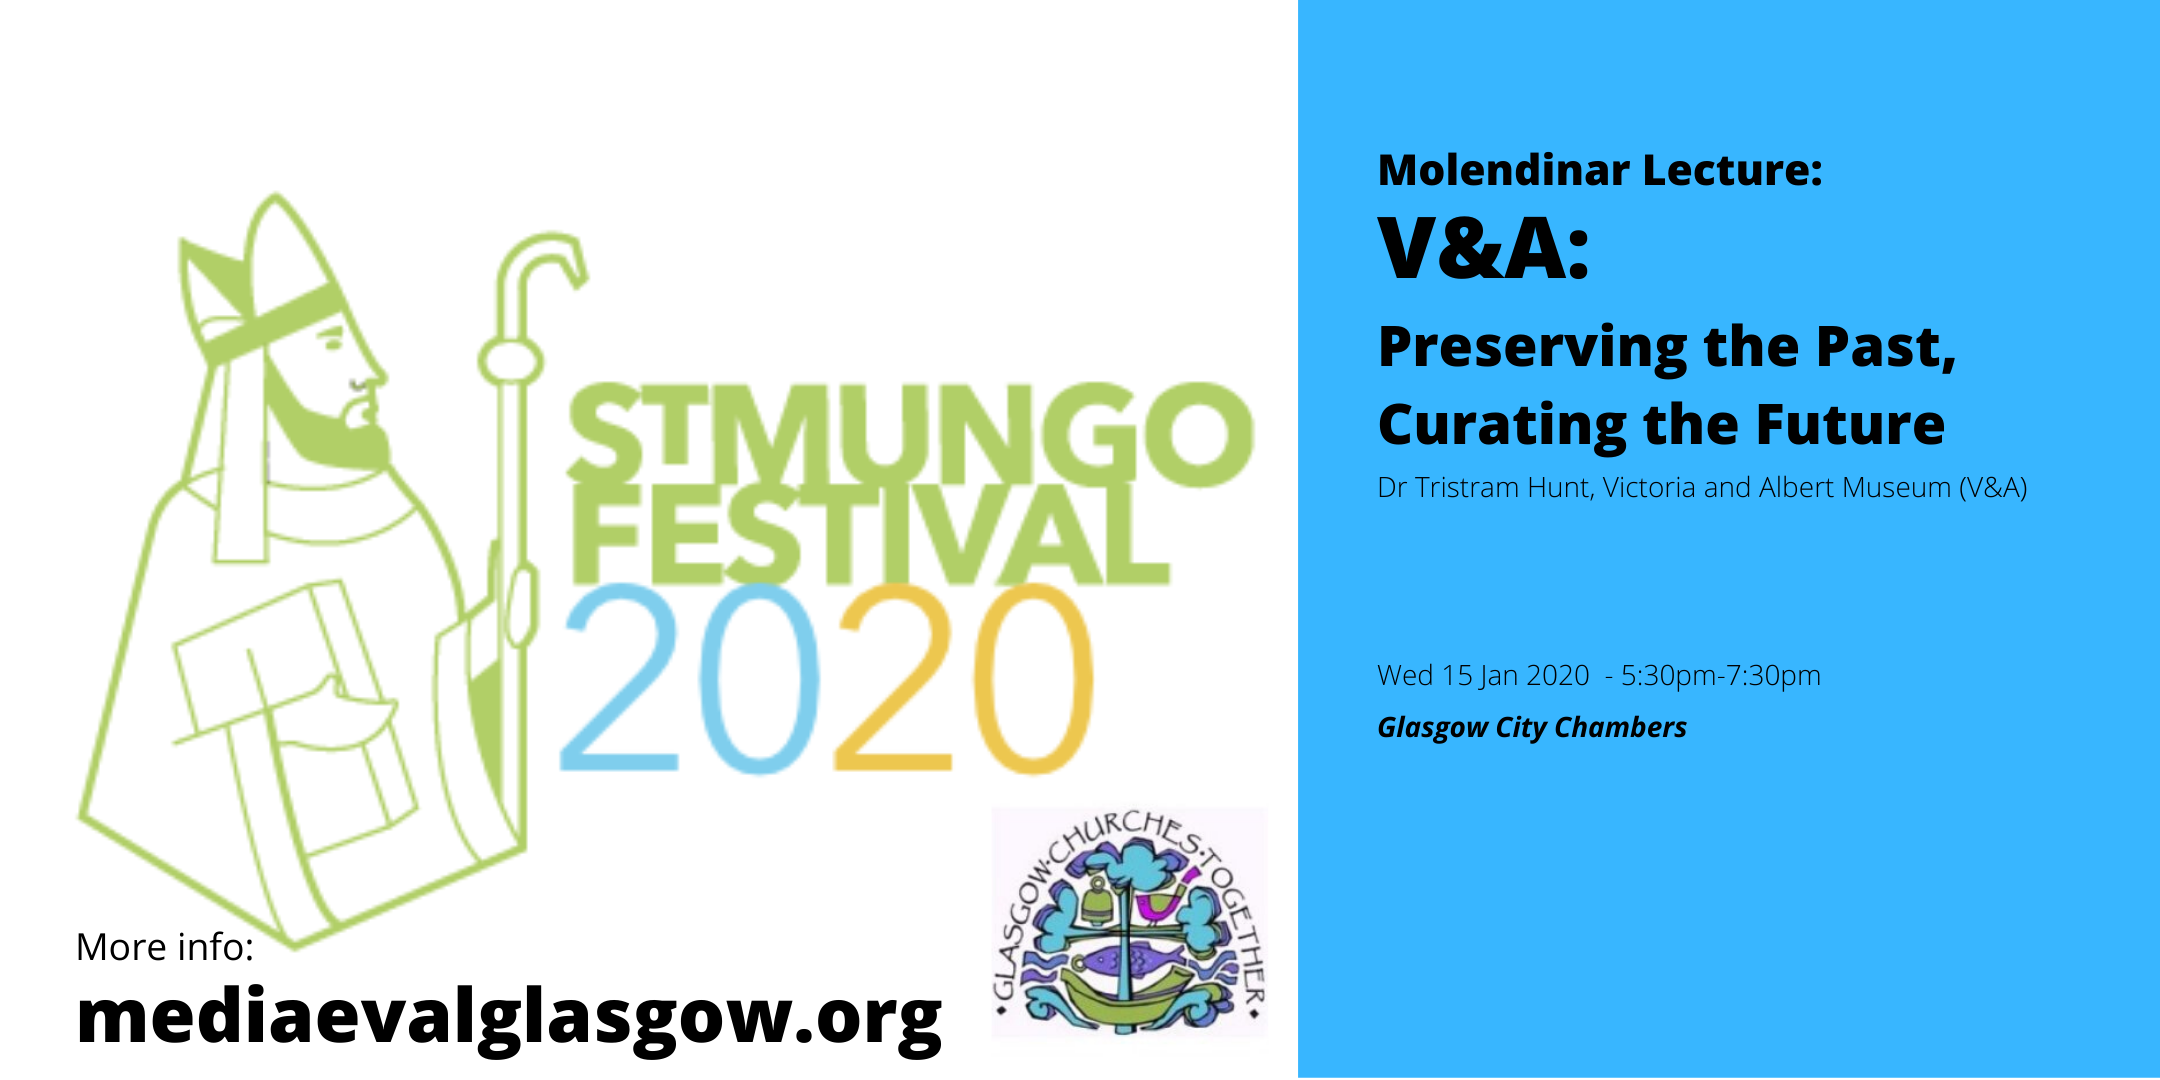 St Mungo 2020 - Molendinar Lecture